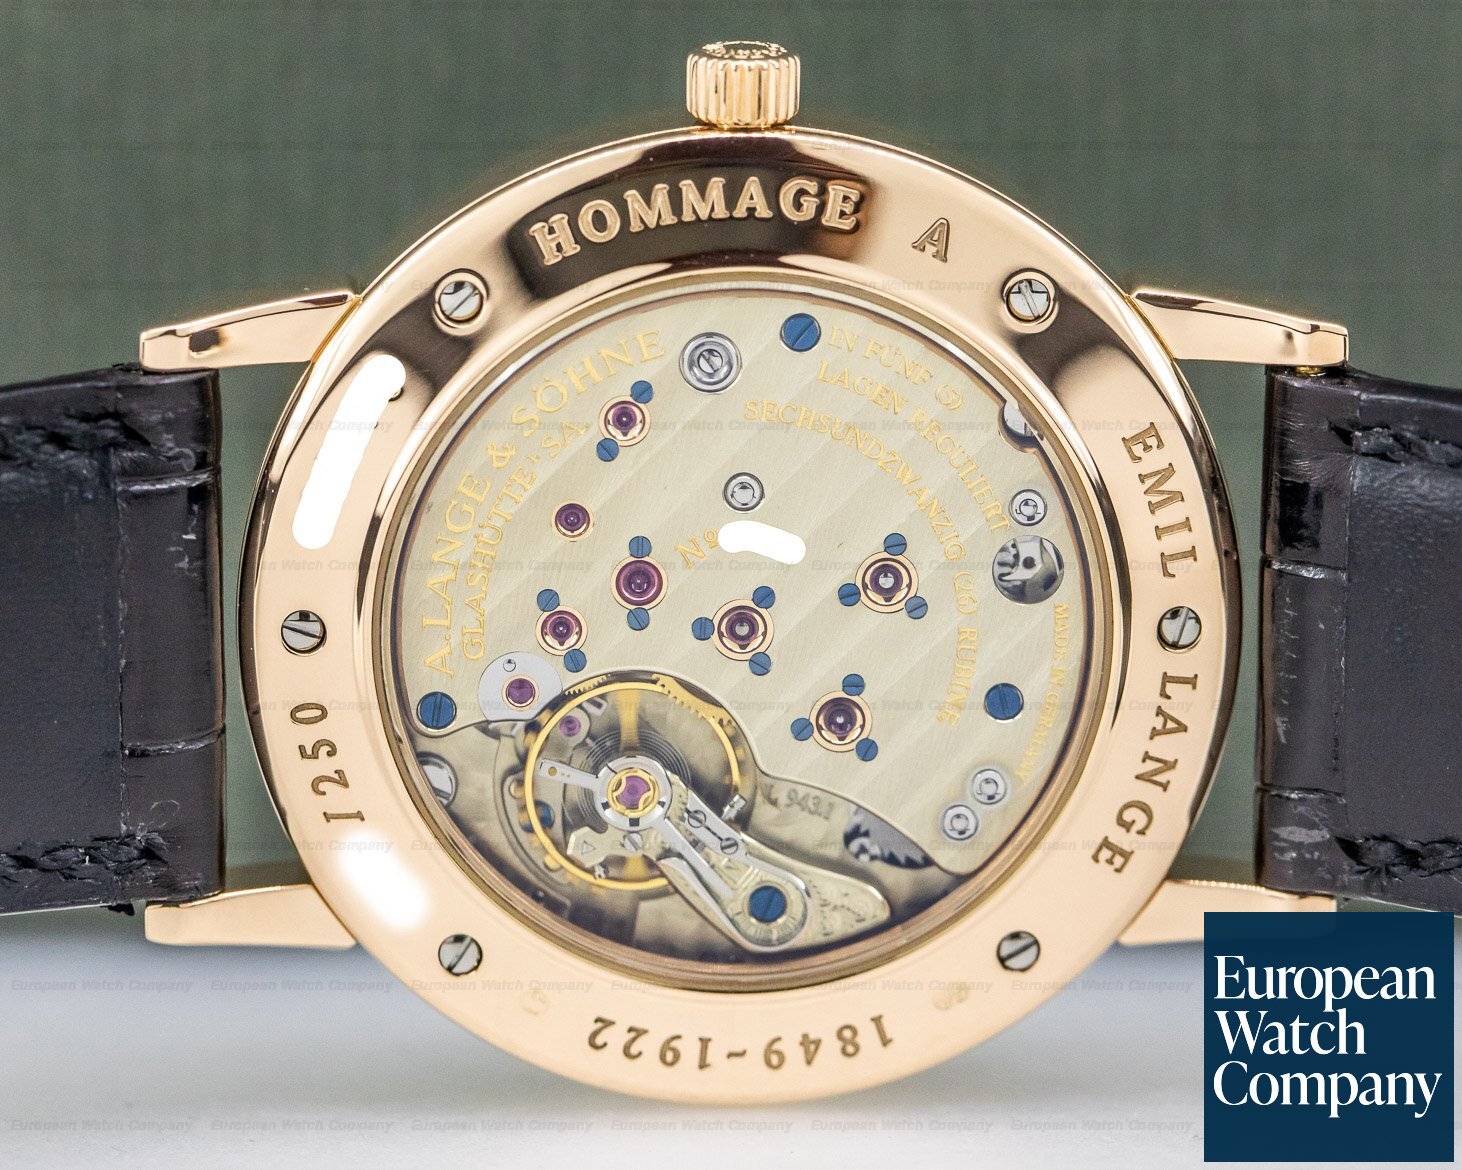 A. Lange and Sohne 1815 Moonphase Hommage to Emil Lange Rose Gold Limited Ref. 231.031